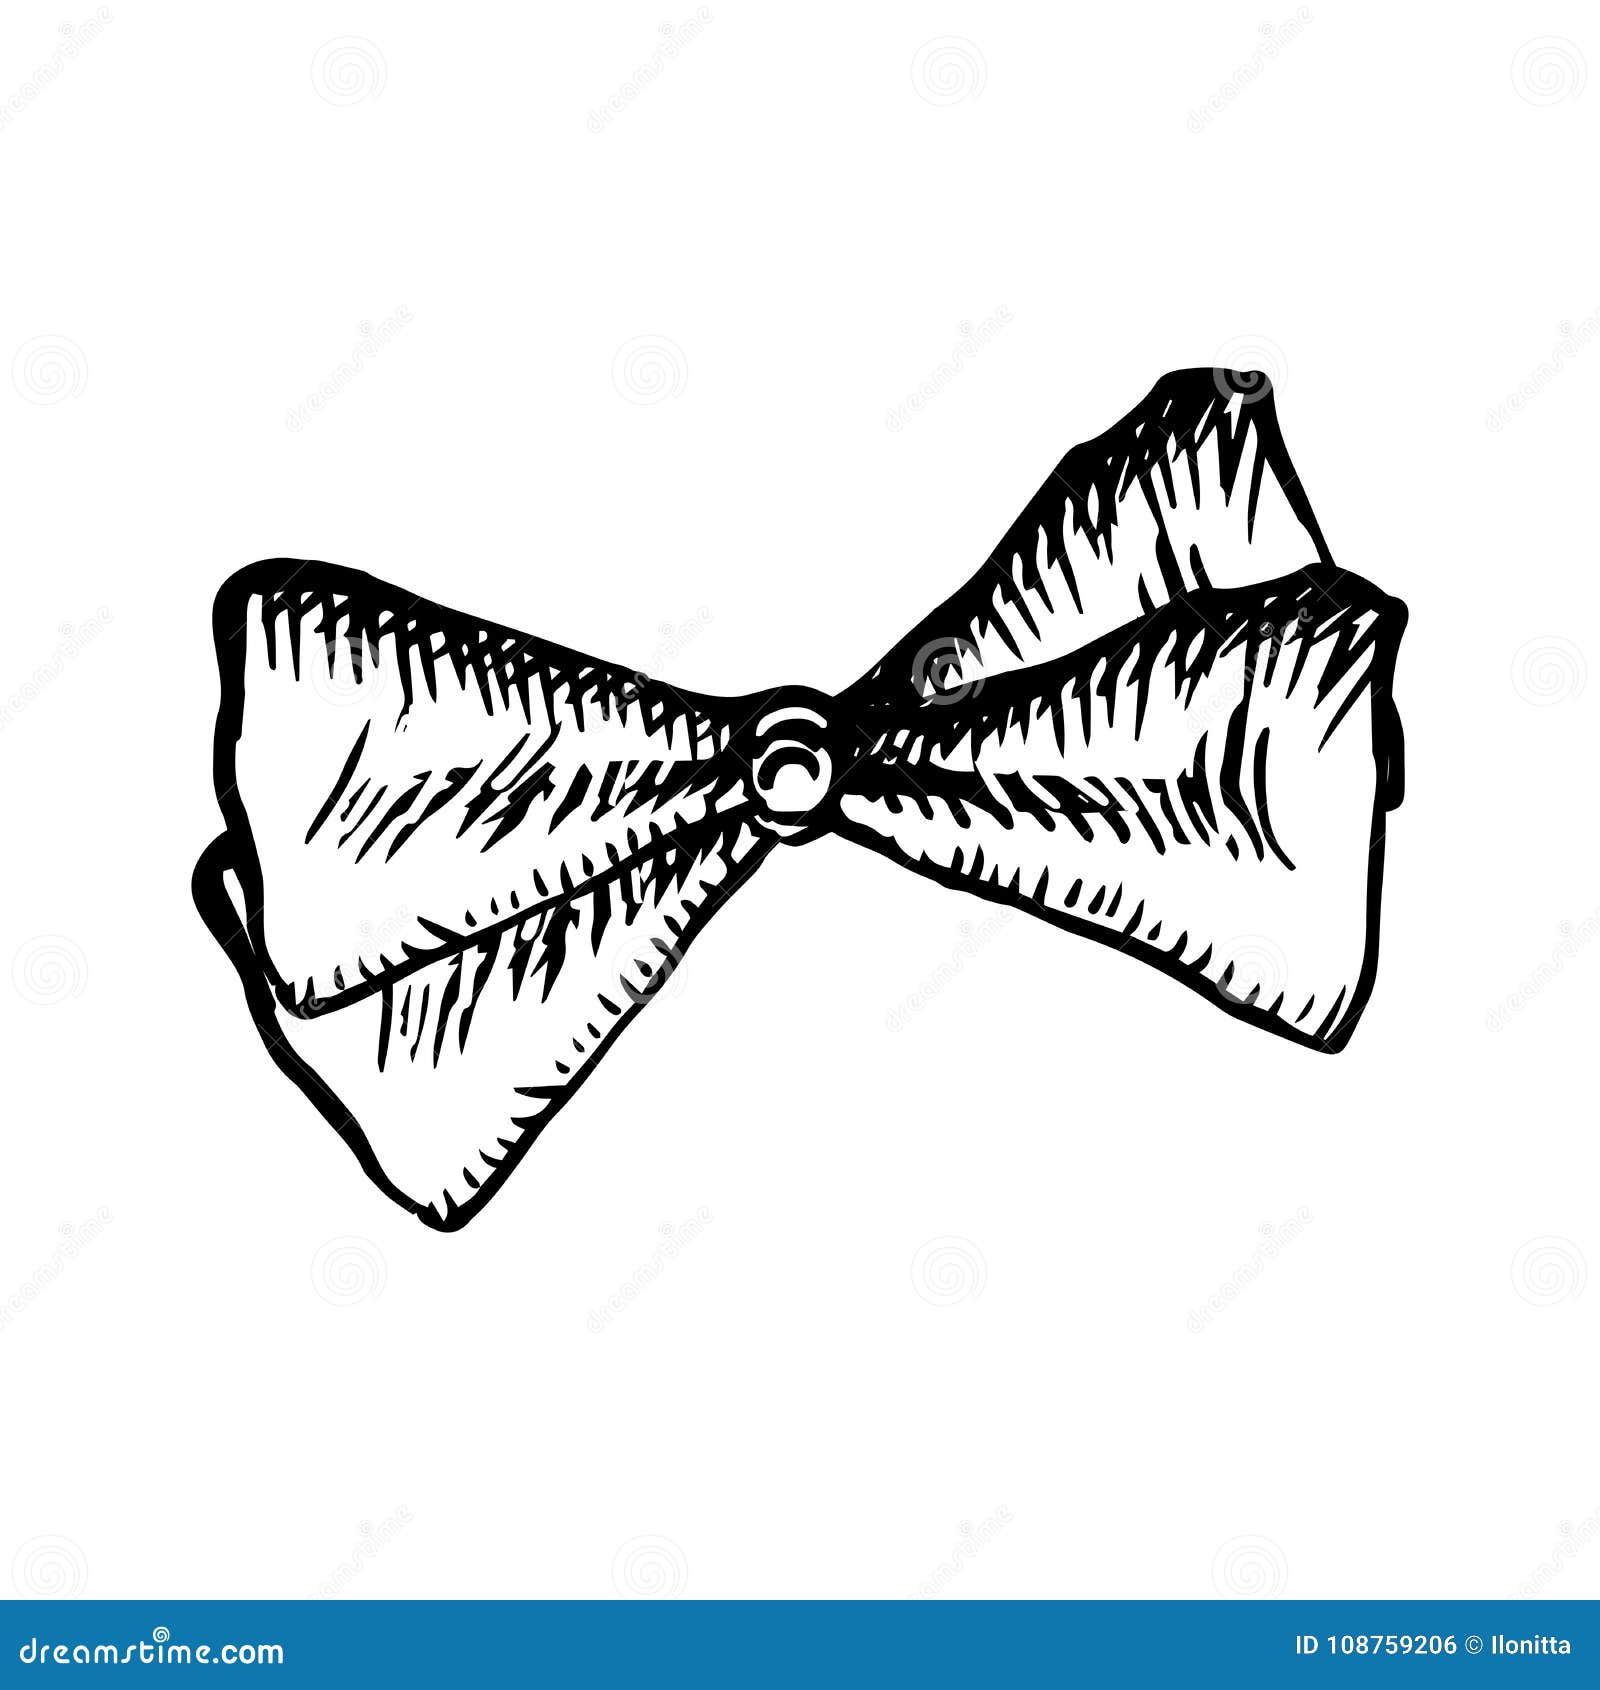 Bow Tie Sketch Icon on White Background. Vintage Neck Tie Vector